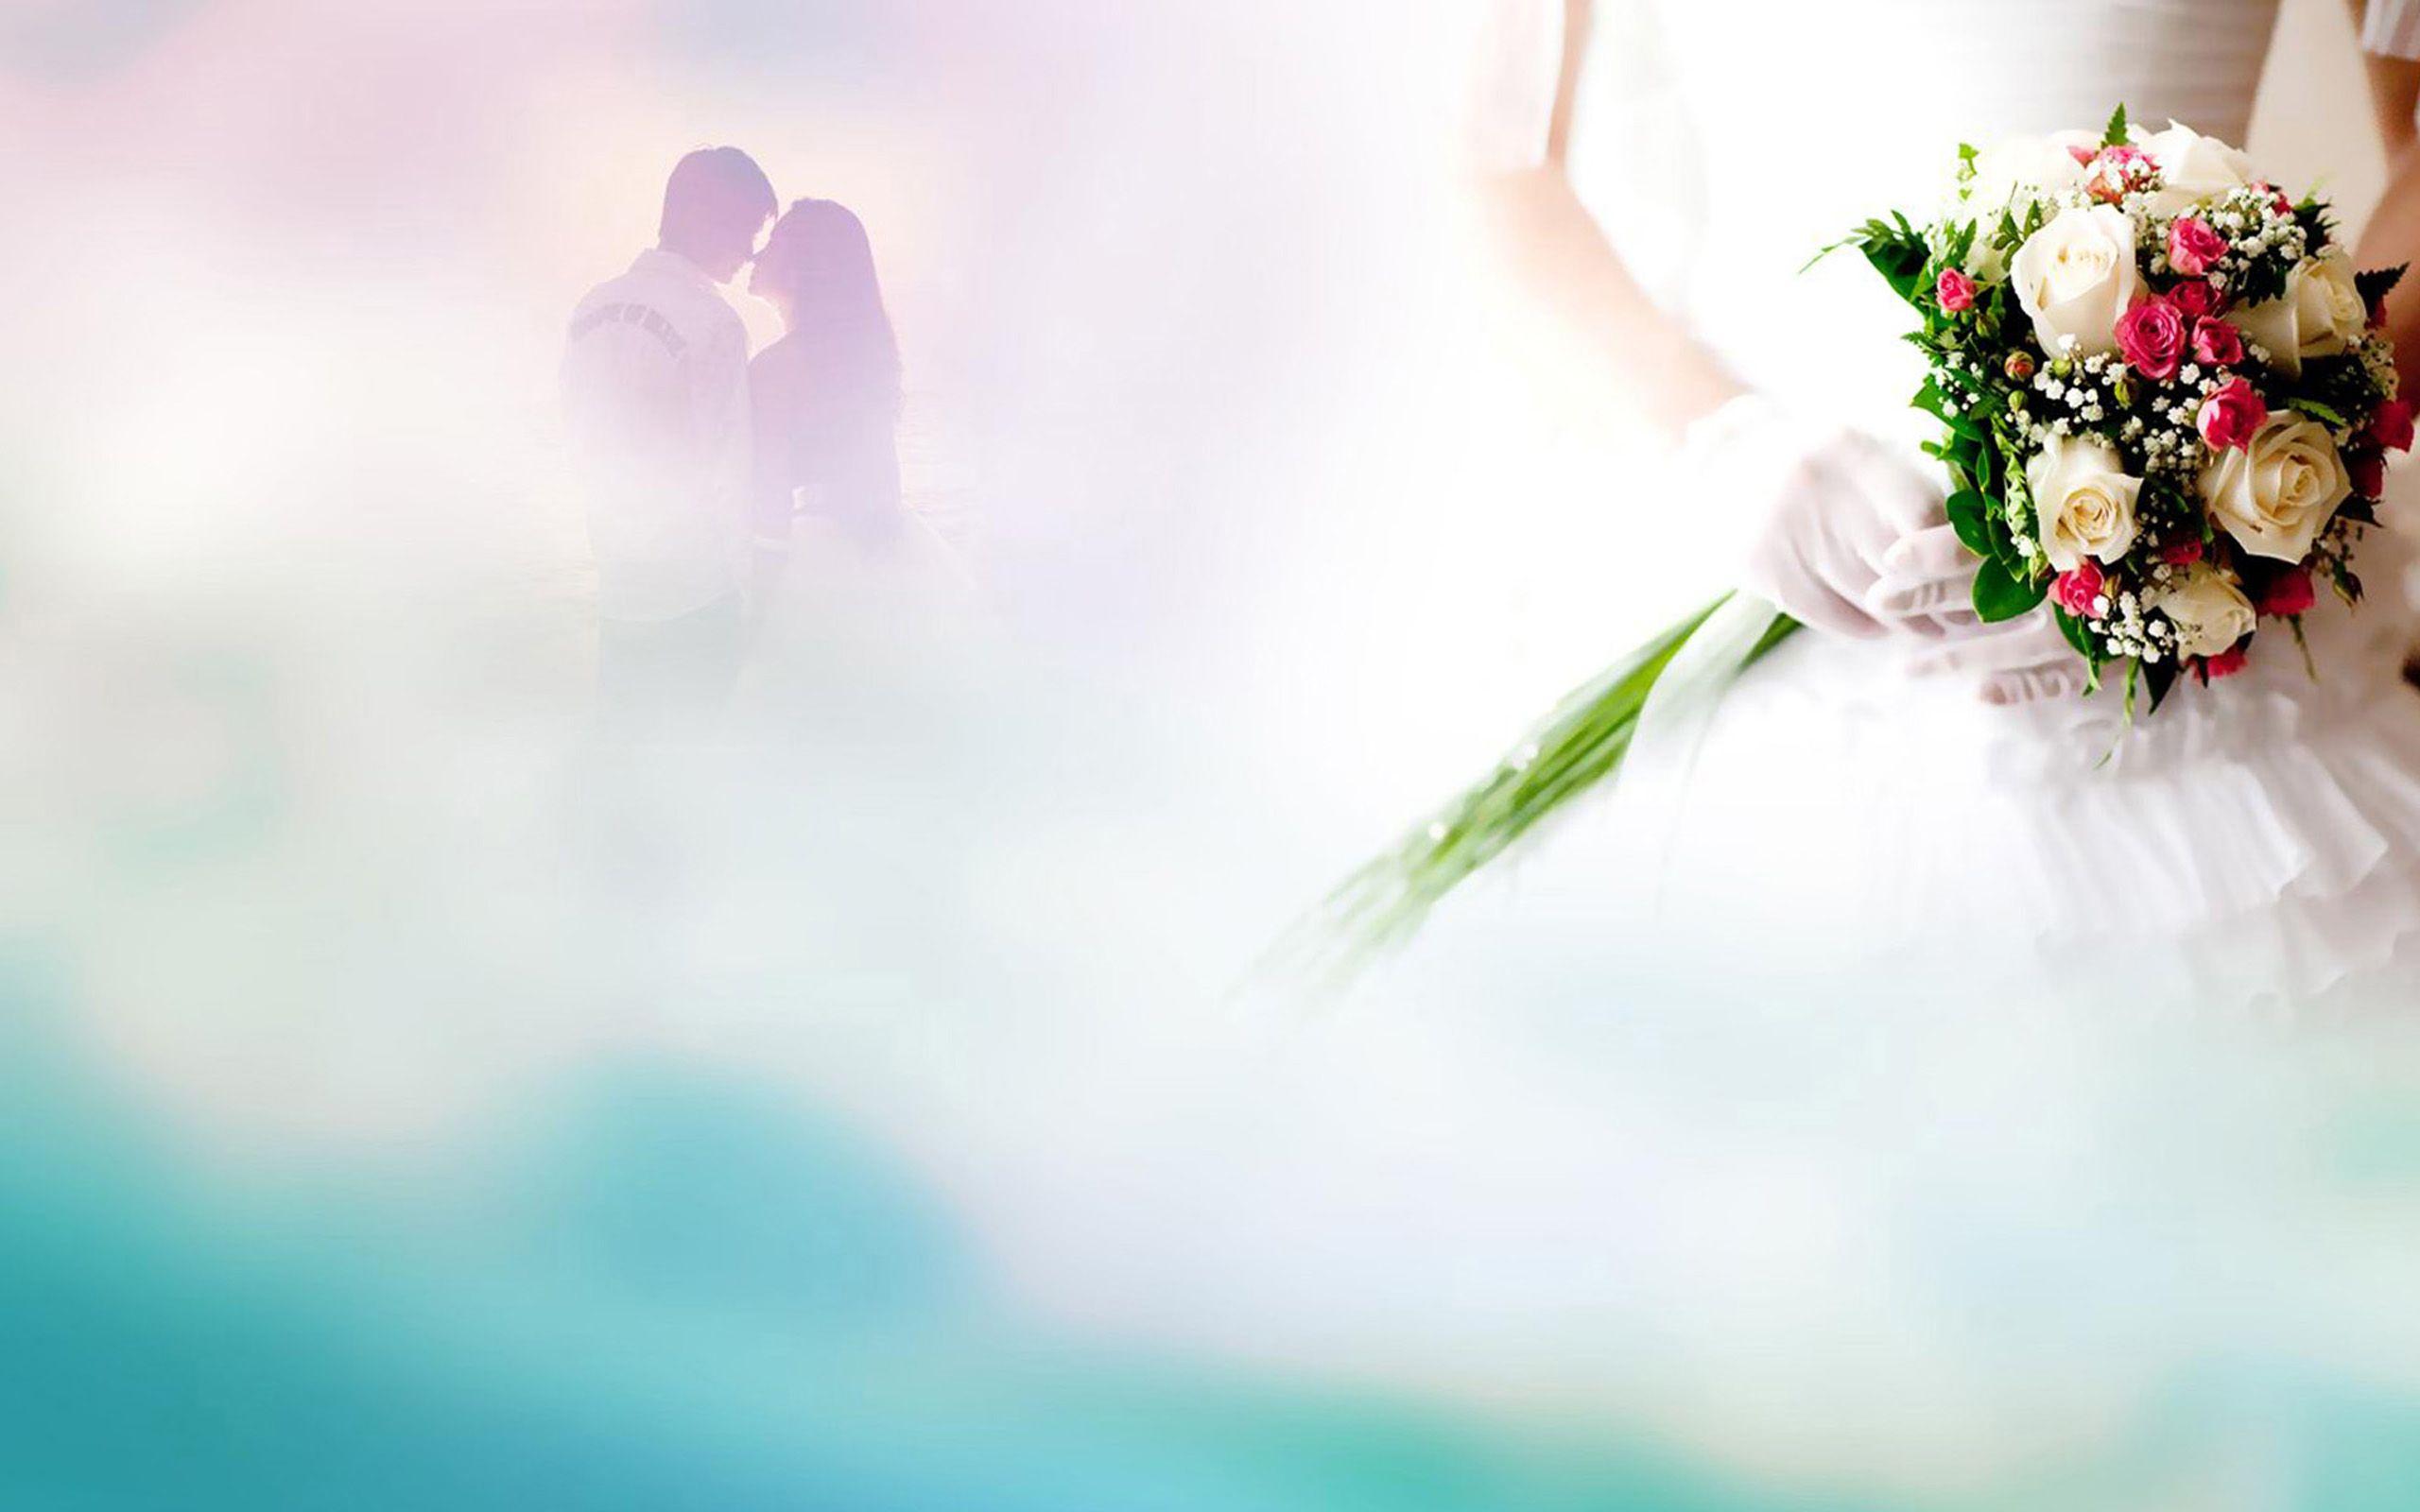 Wedding Party Images  Free Download on Freepik